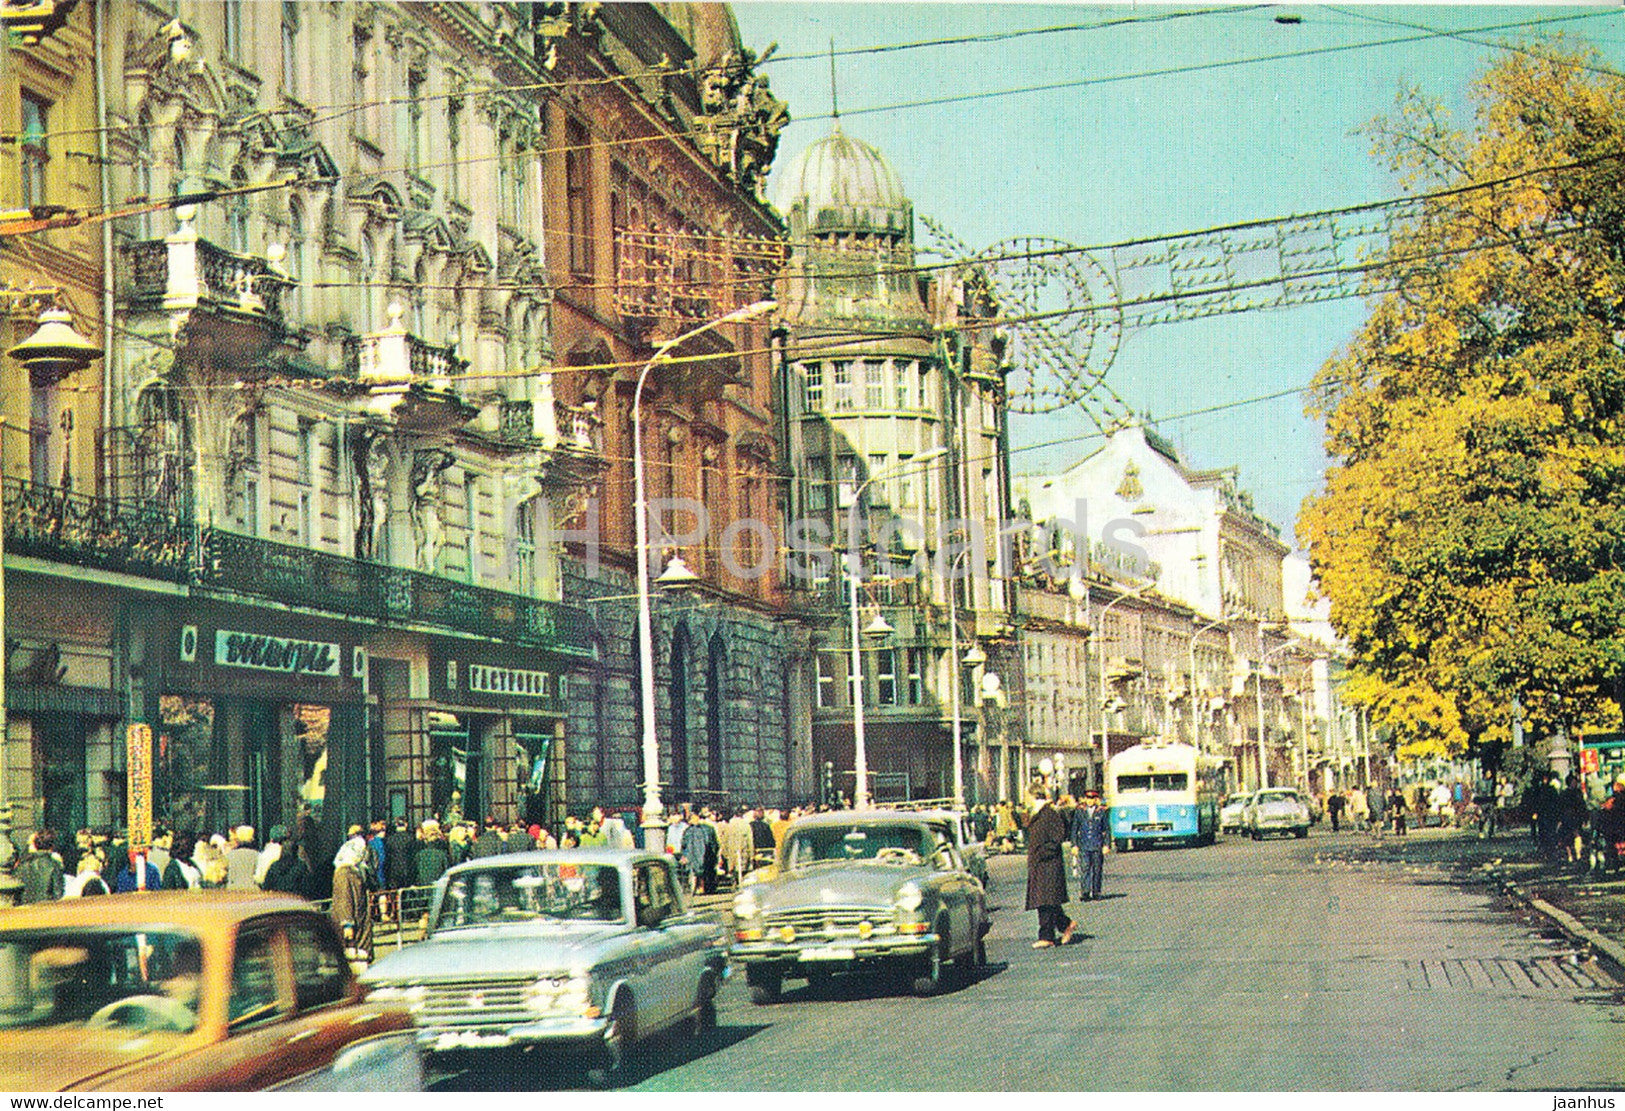 Lviv - Lvov - Lenin avenue - car Volga Moskvich - trolleybus - 1970 - Ukraine USSR - unused - JH Postcards